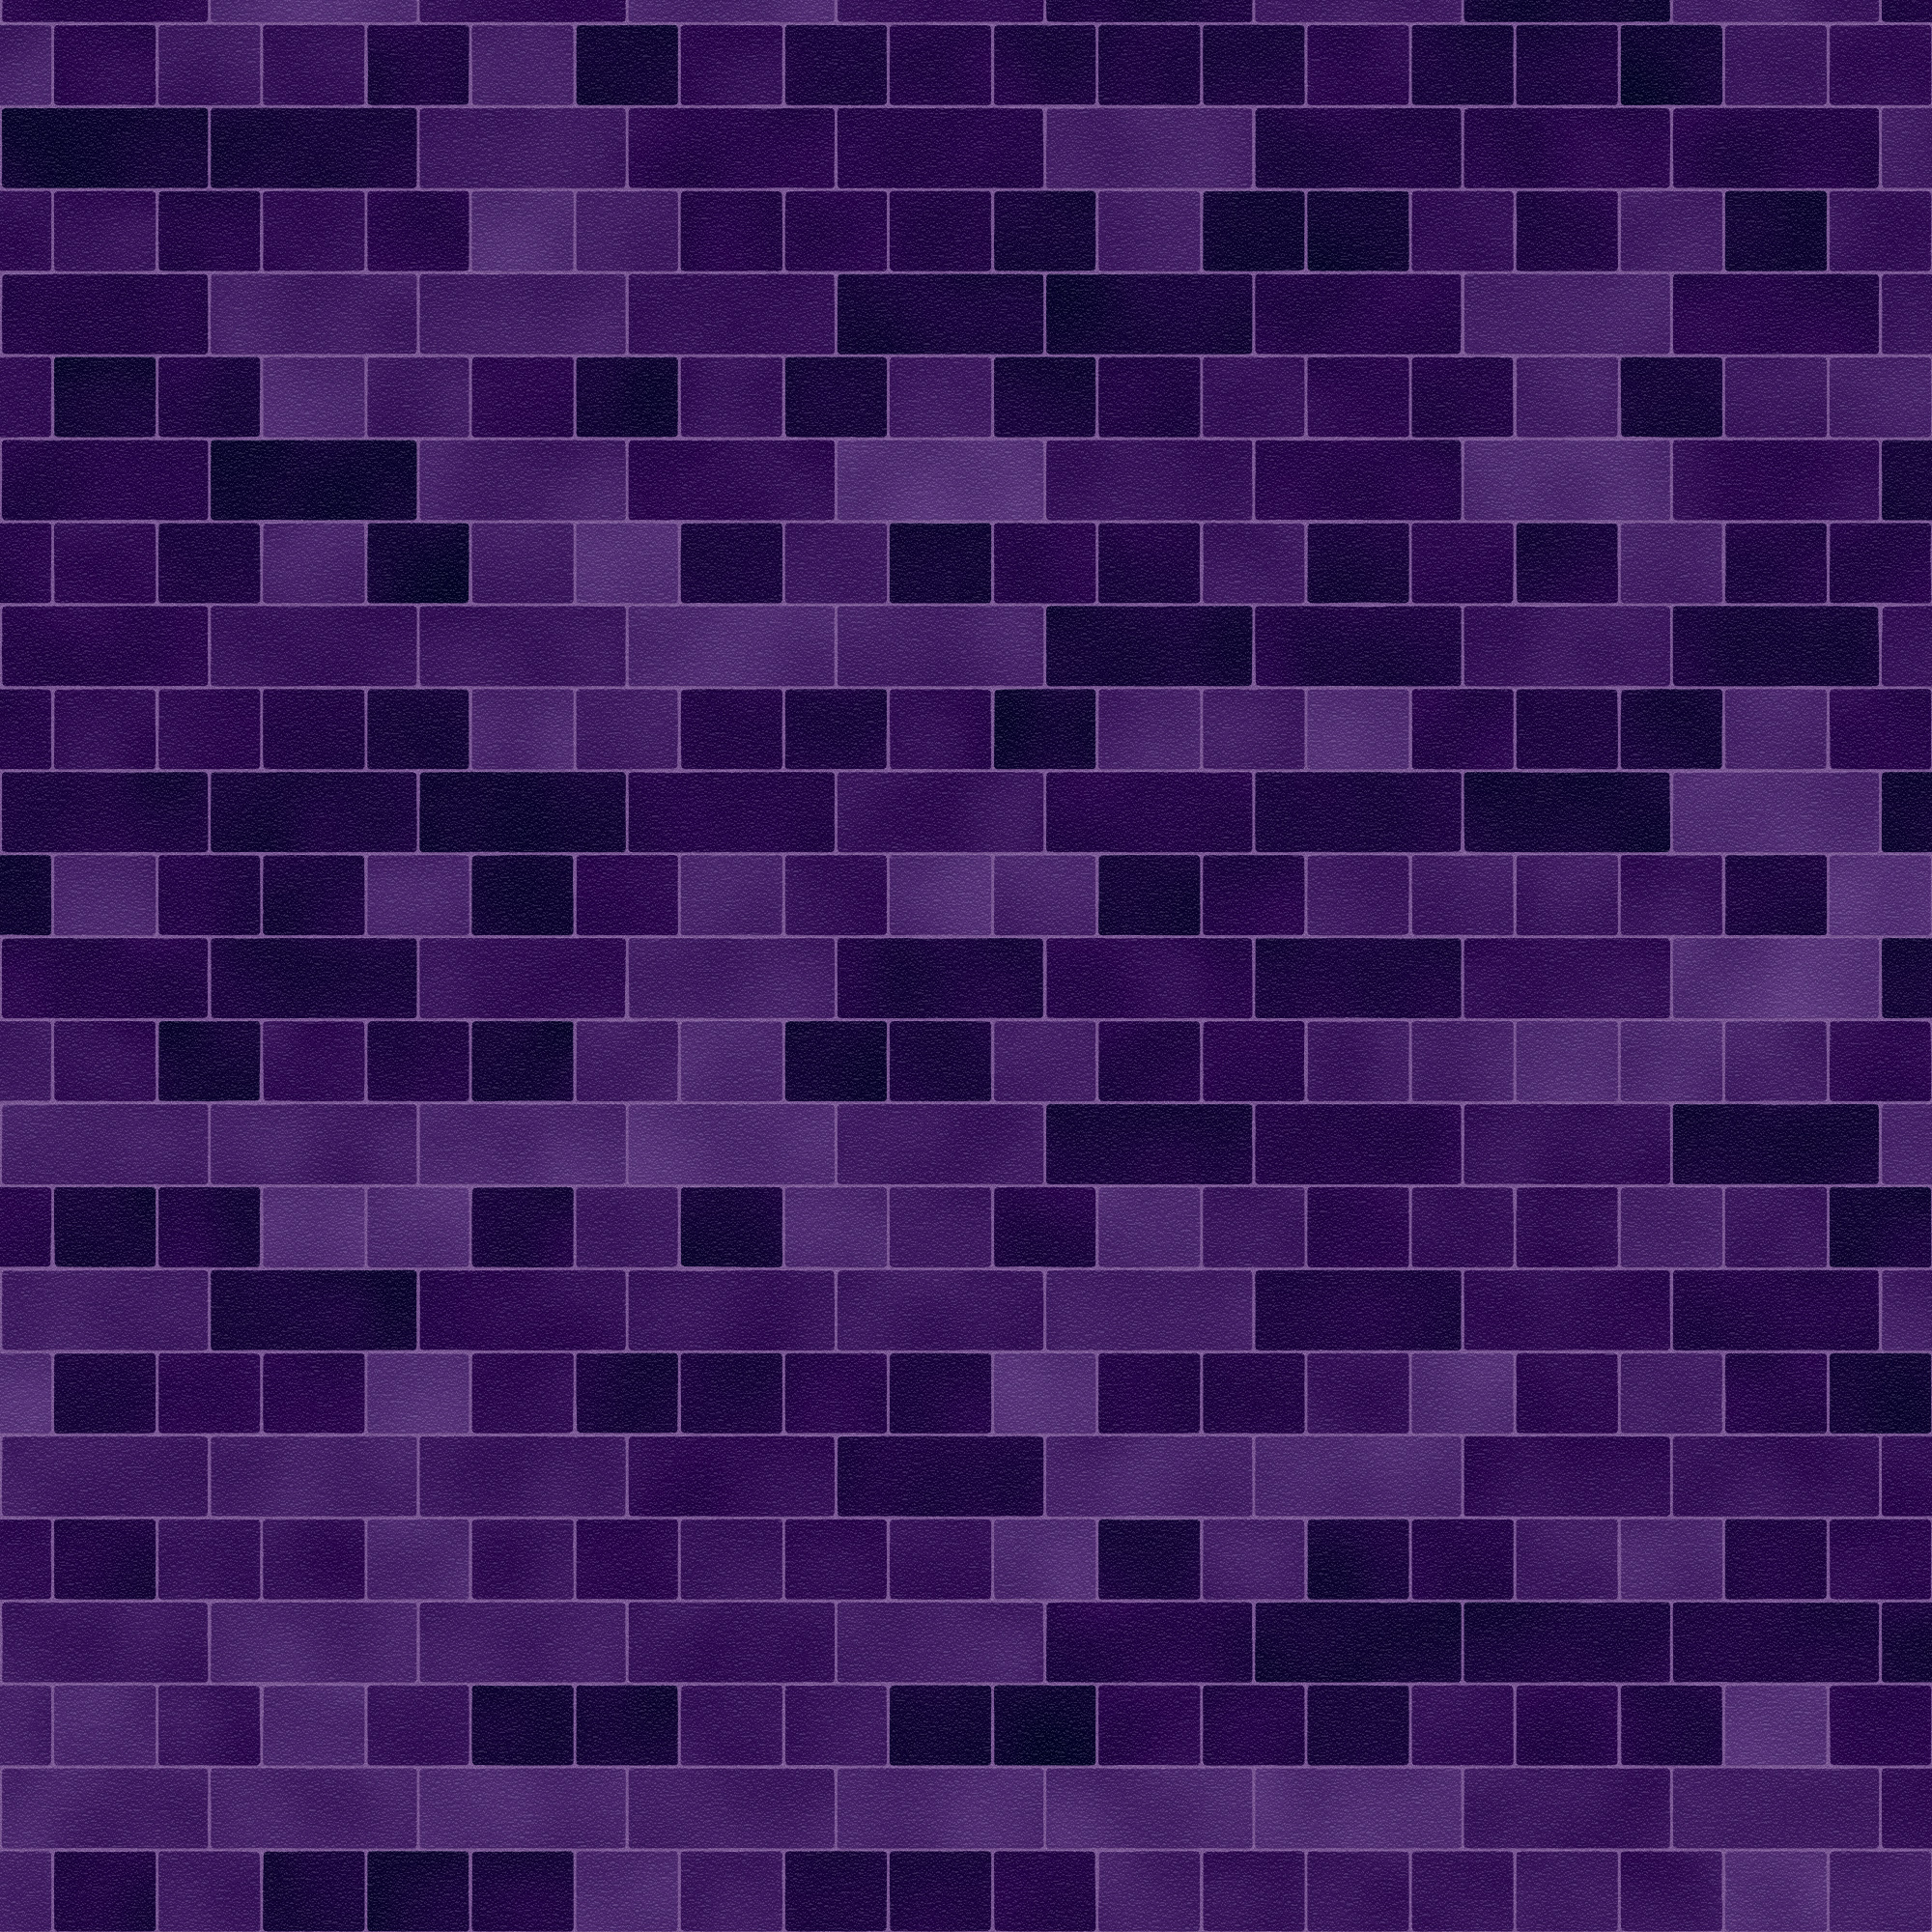 purple brick wall texture, brick wall, download photo, background, texture